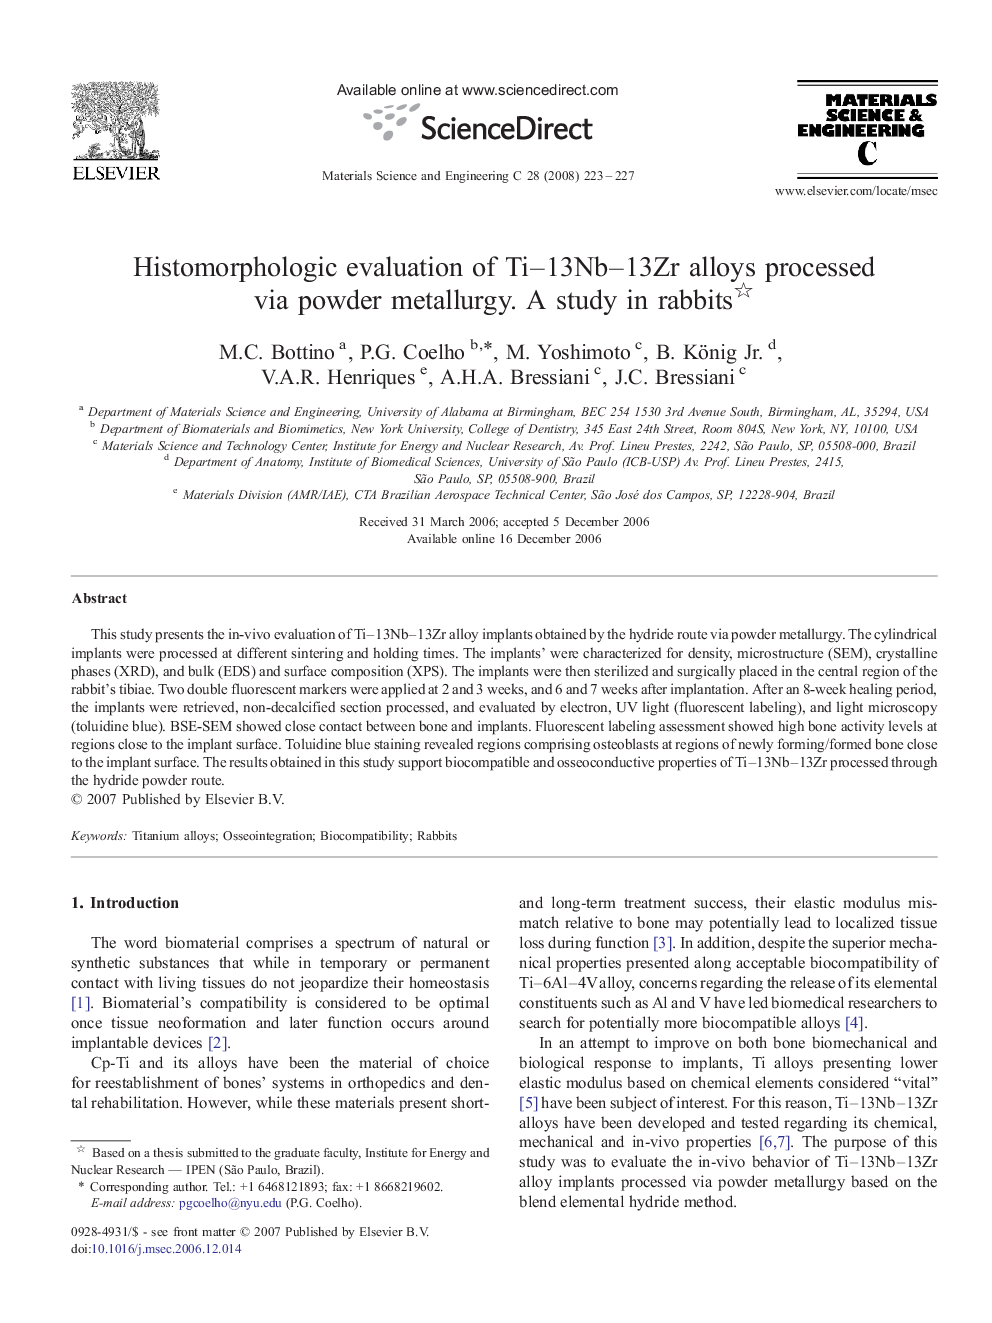 Histomorphologic evaluation of Ti–13Nb–13Zr alloys processed via powder metallurgy. A study in rabbits 